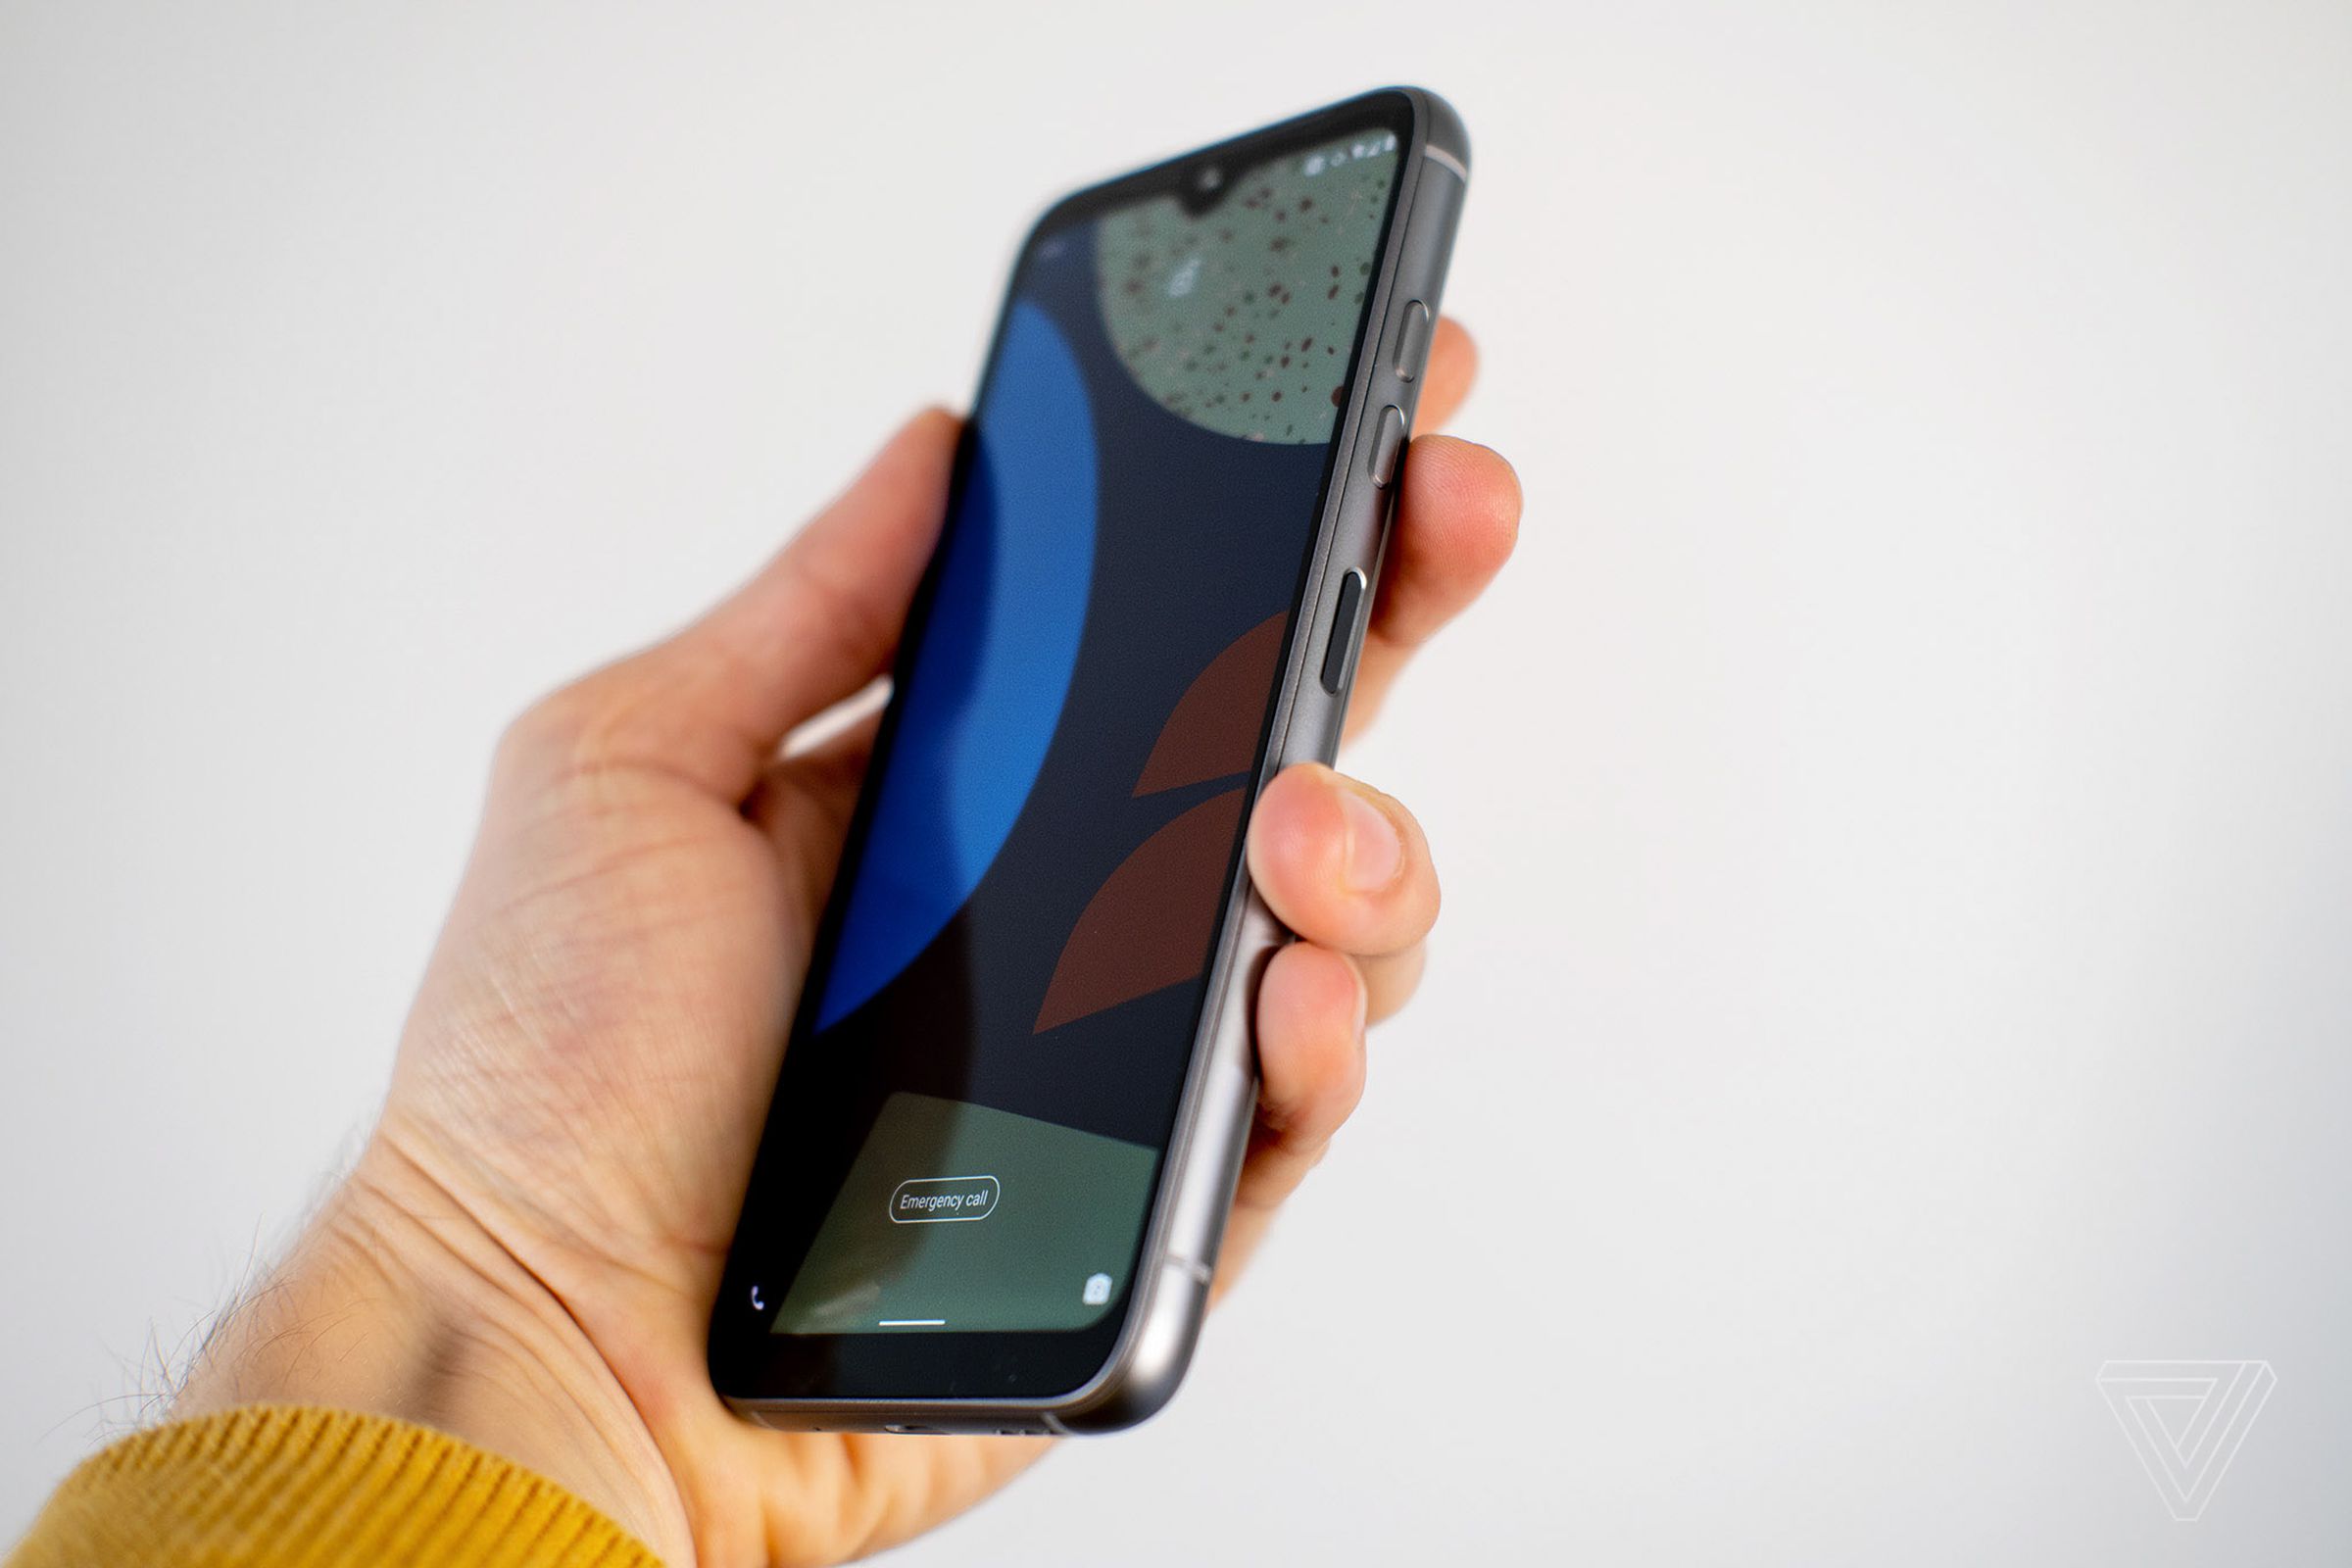 The phone’s side-mounted fingerprint sensor.